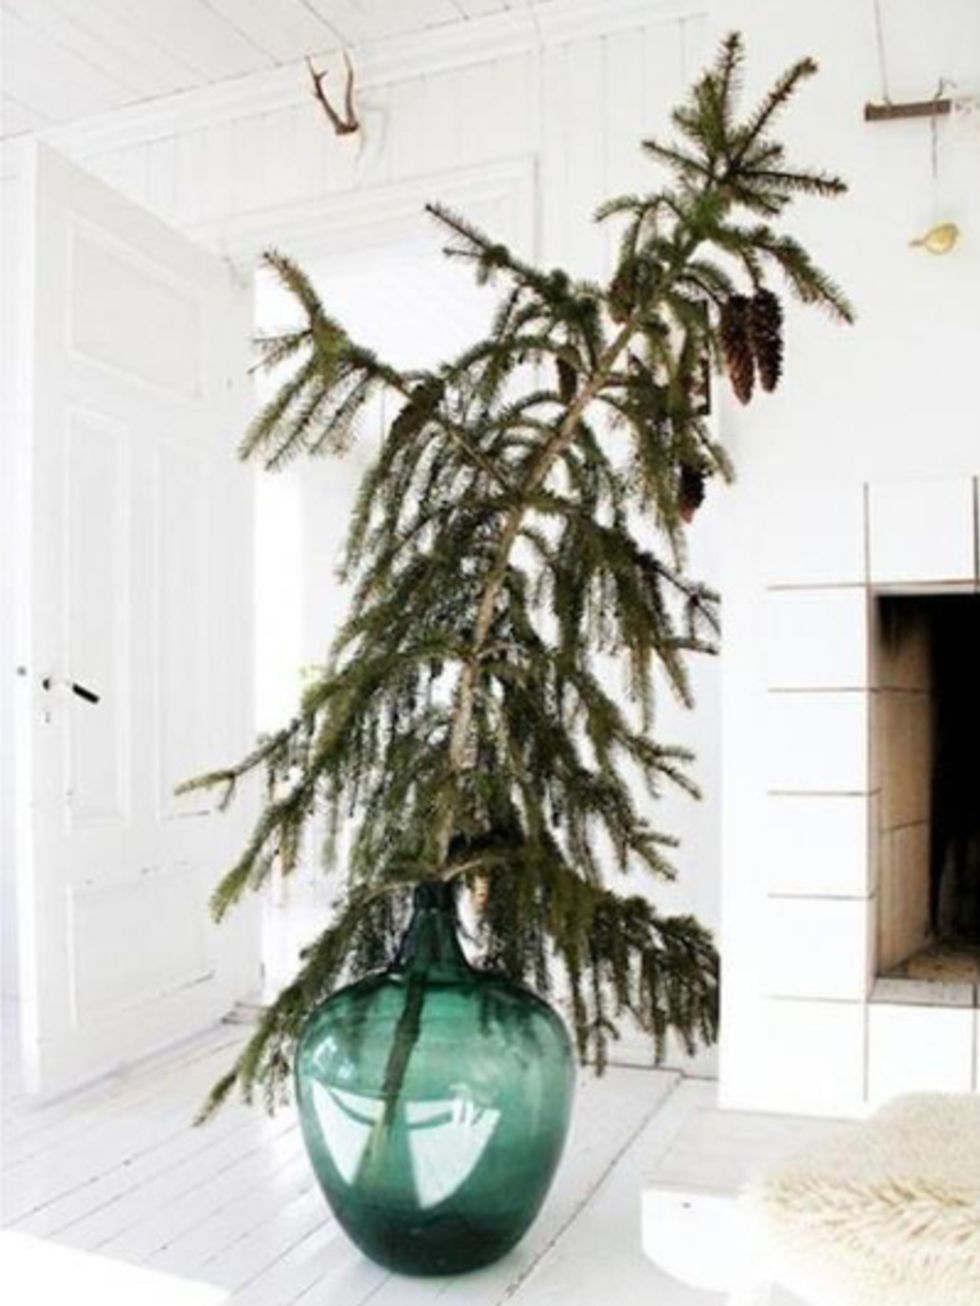 Branch, Twig, Wall, Christmas decoration, Teal, Interior design, Turquoise, Aqua, Flowerpot, Vase, 